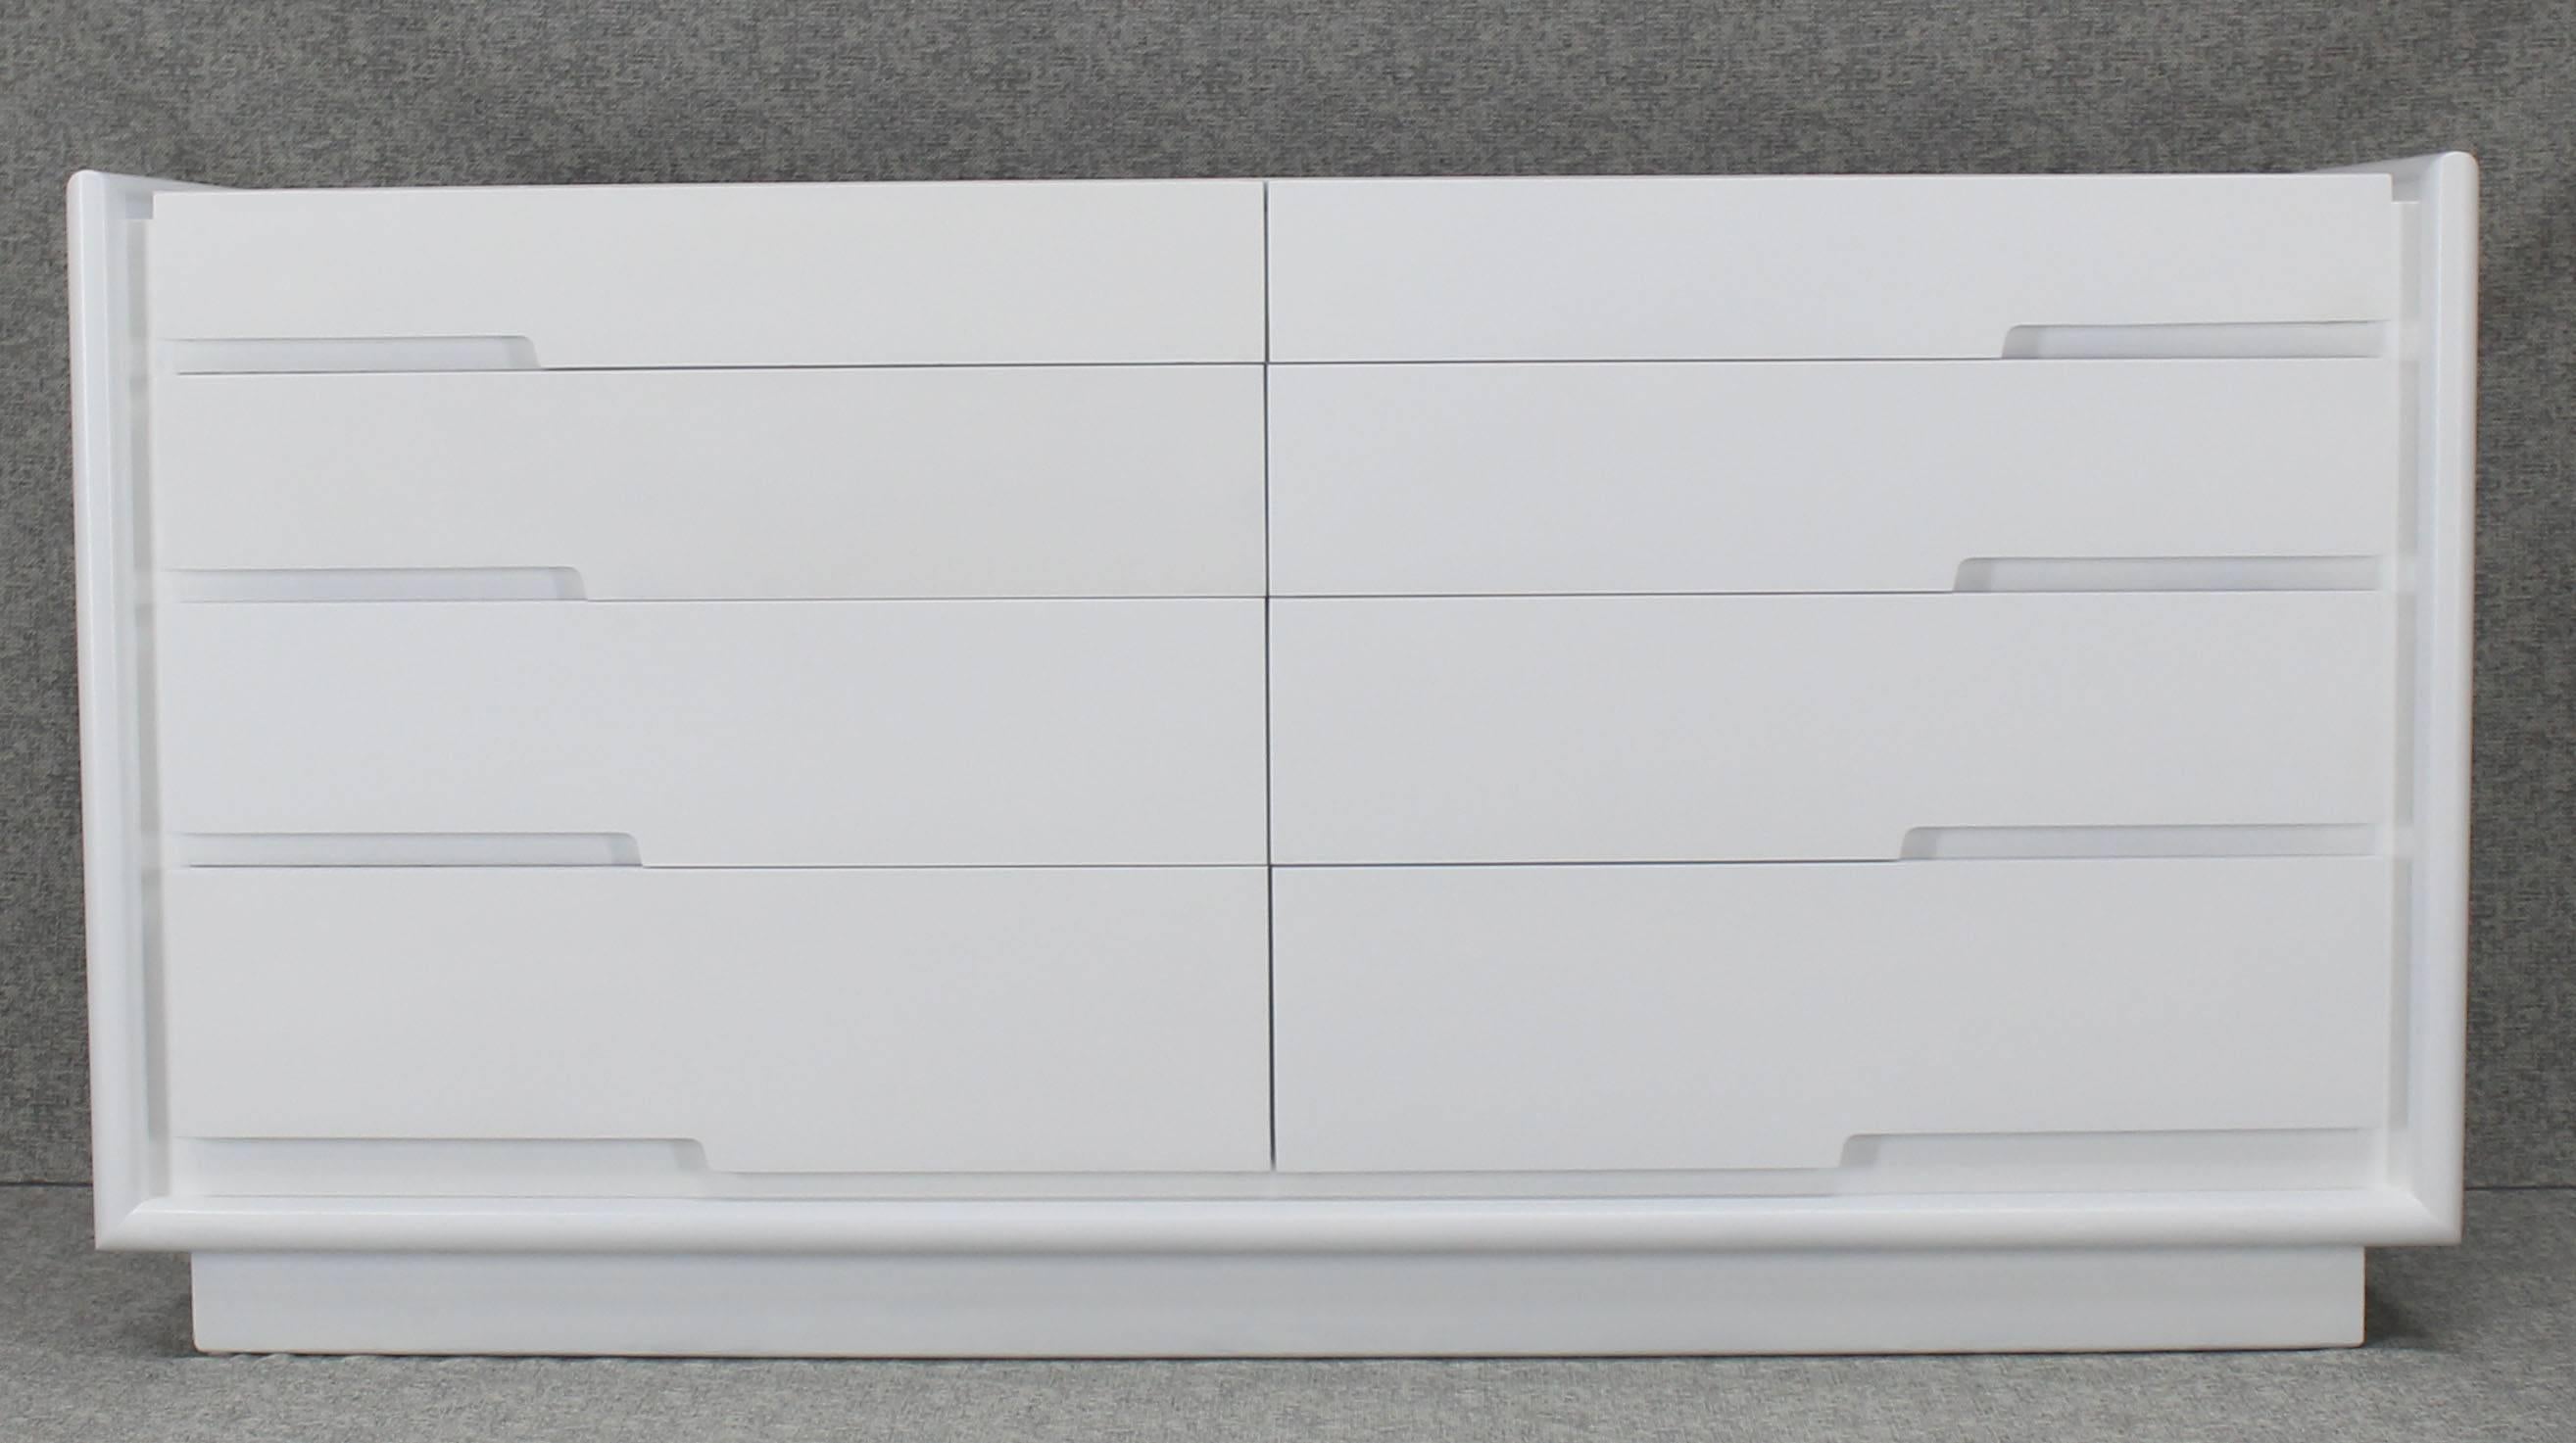 Made in Sweden Edmond Spence design white lacquer double dresser.